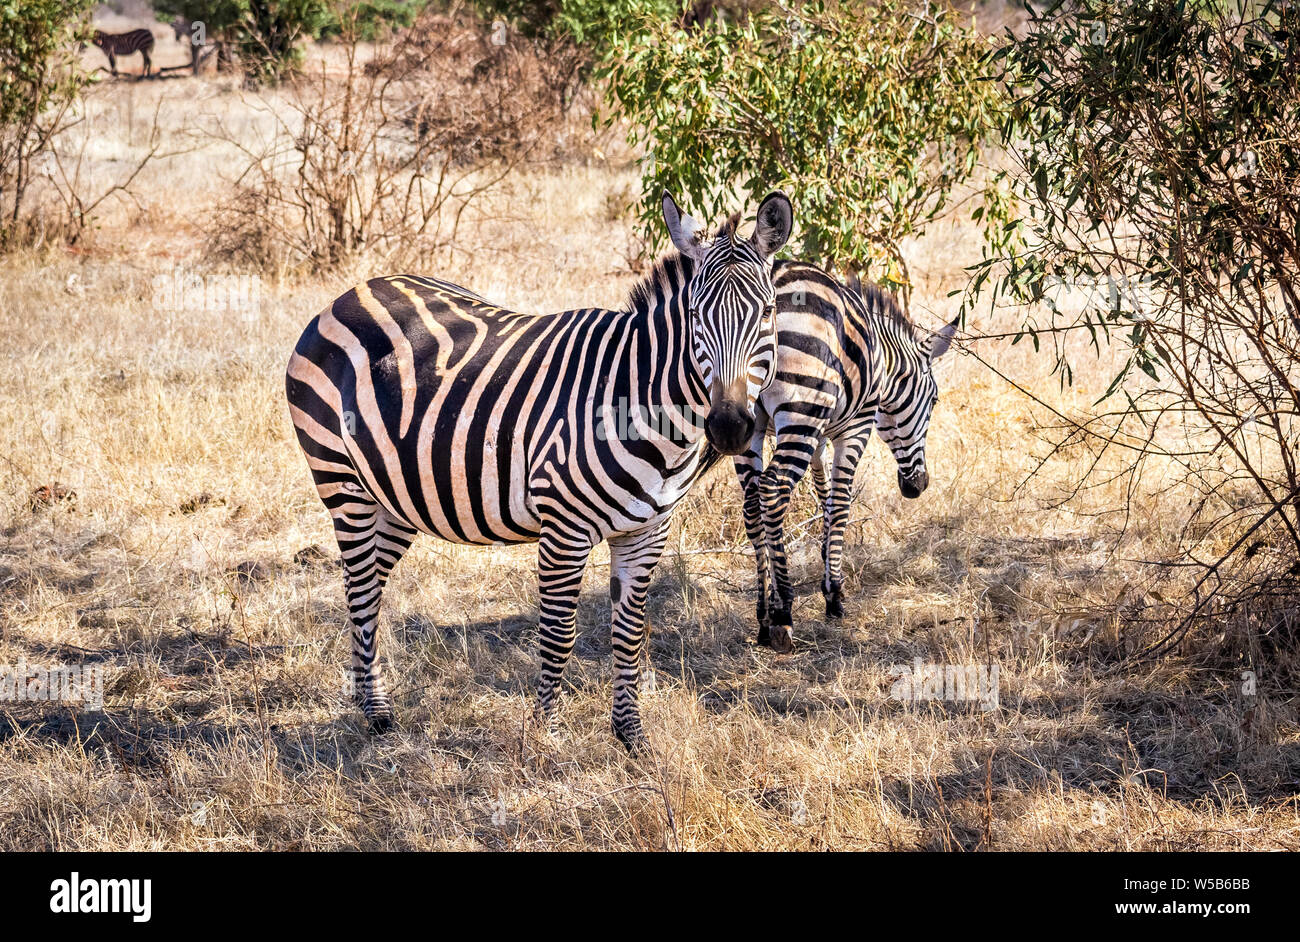 Herd of amazing zebras on savannah plains in Tsavo East park, Kenya Stock Photo